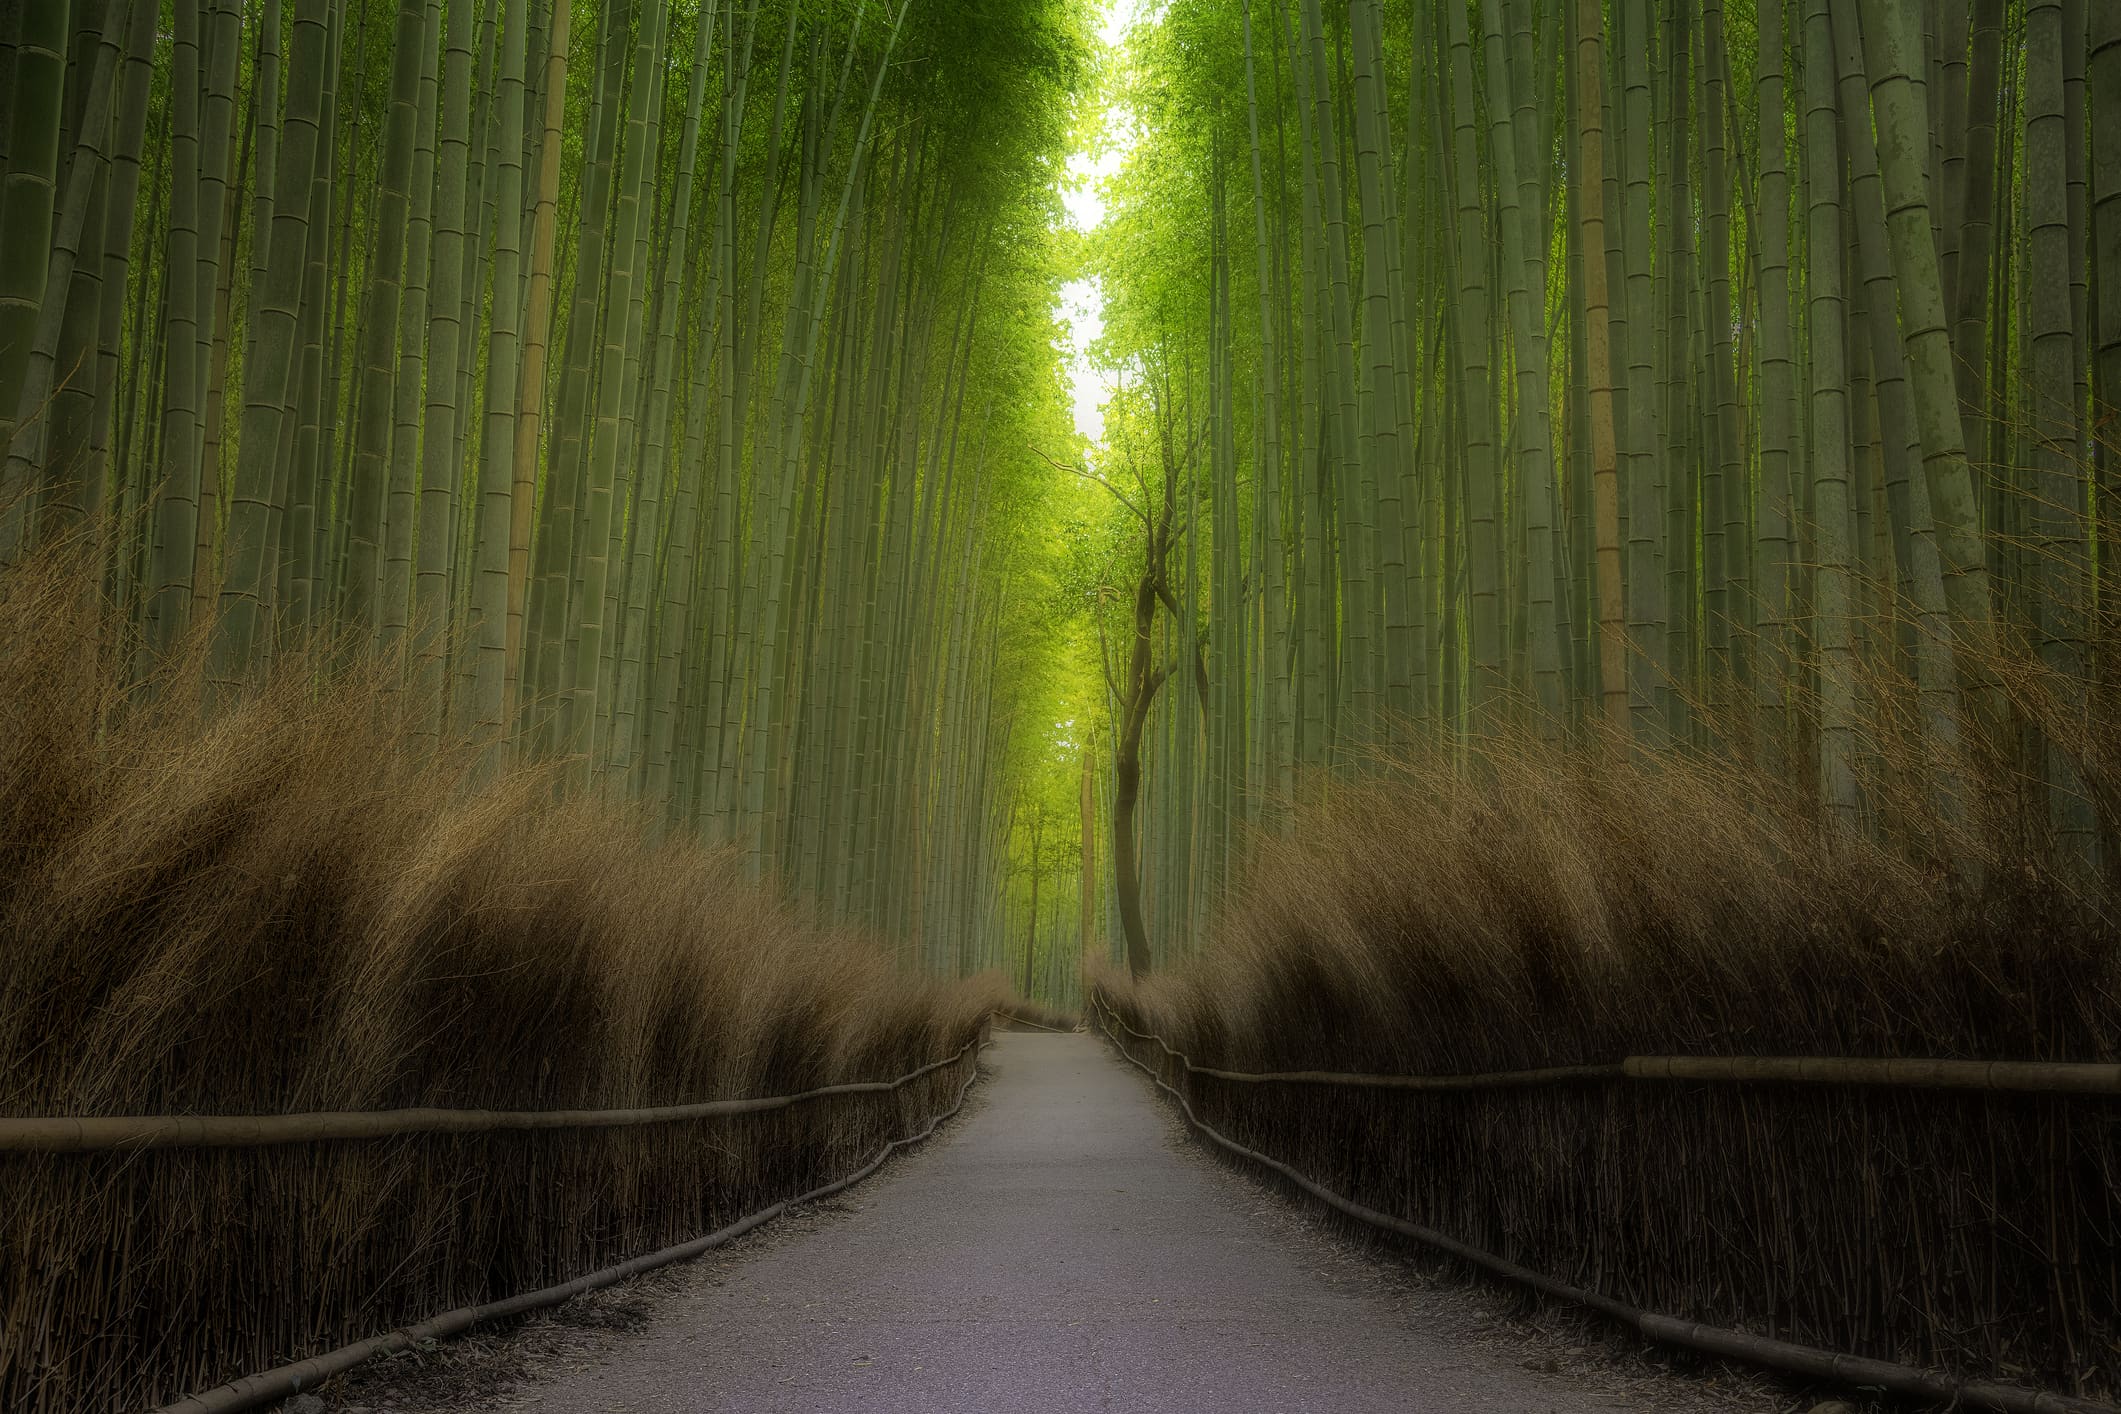 What Arashiyama Bamboo Grove actually appears like